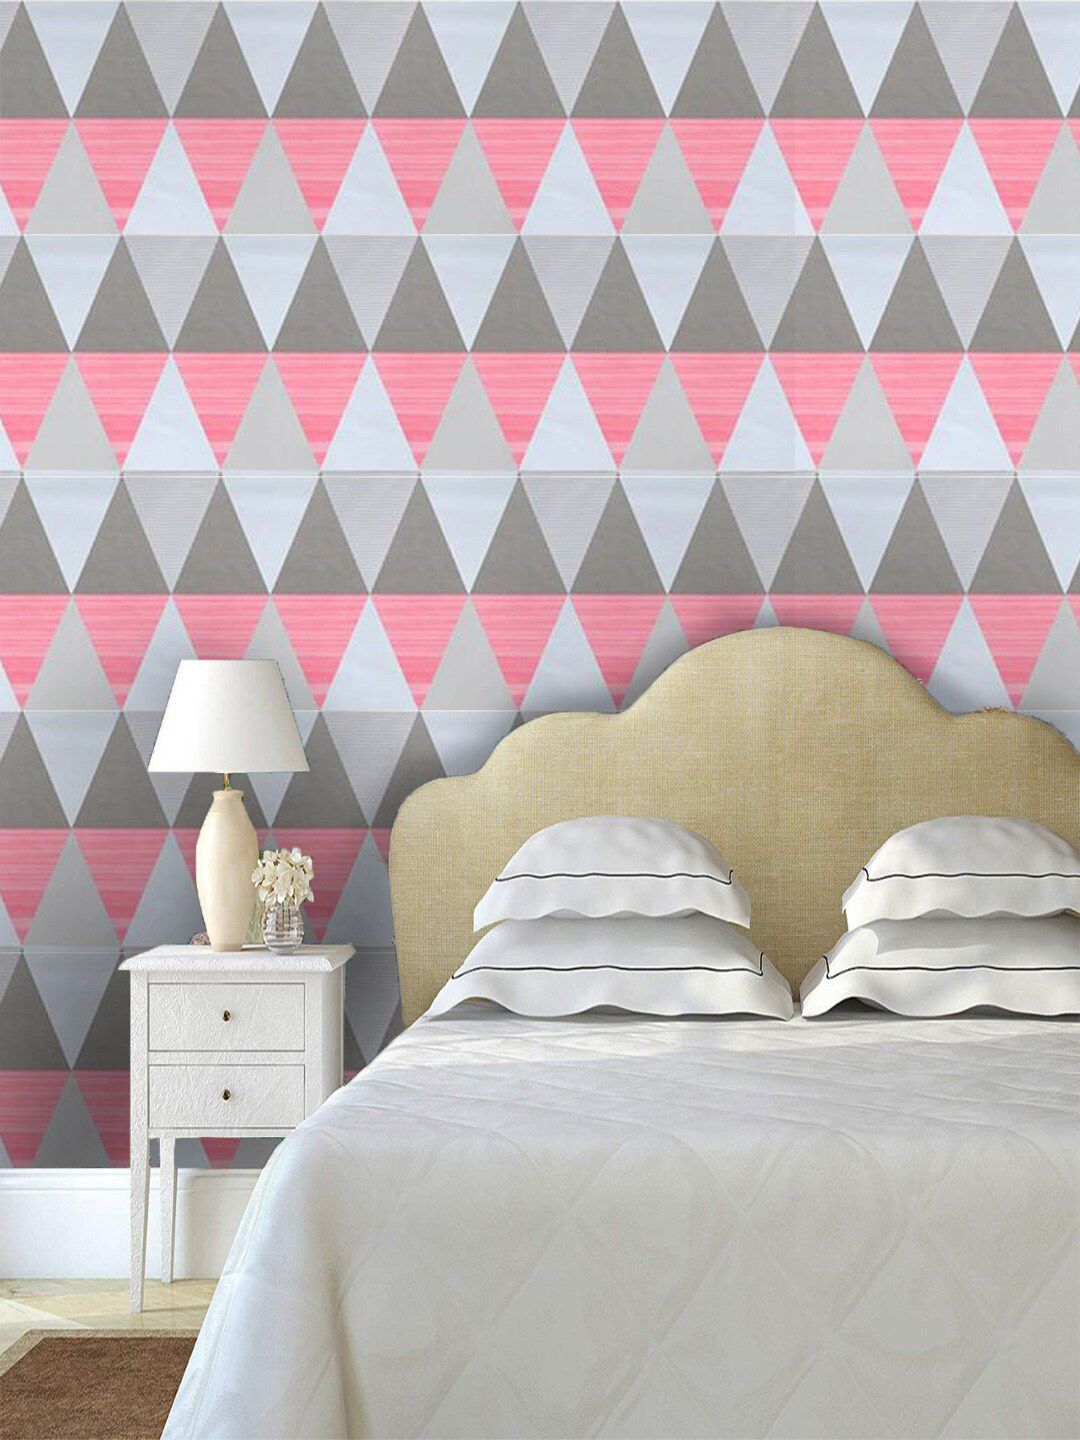 Jaamso Royals Pink & Grey Self-adhesive & Waterproof Geometric Print Wallpaper Price in India